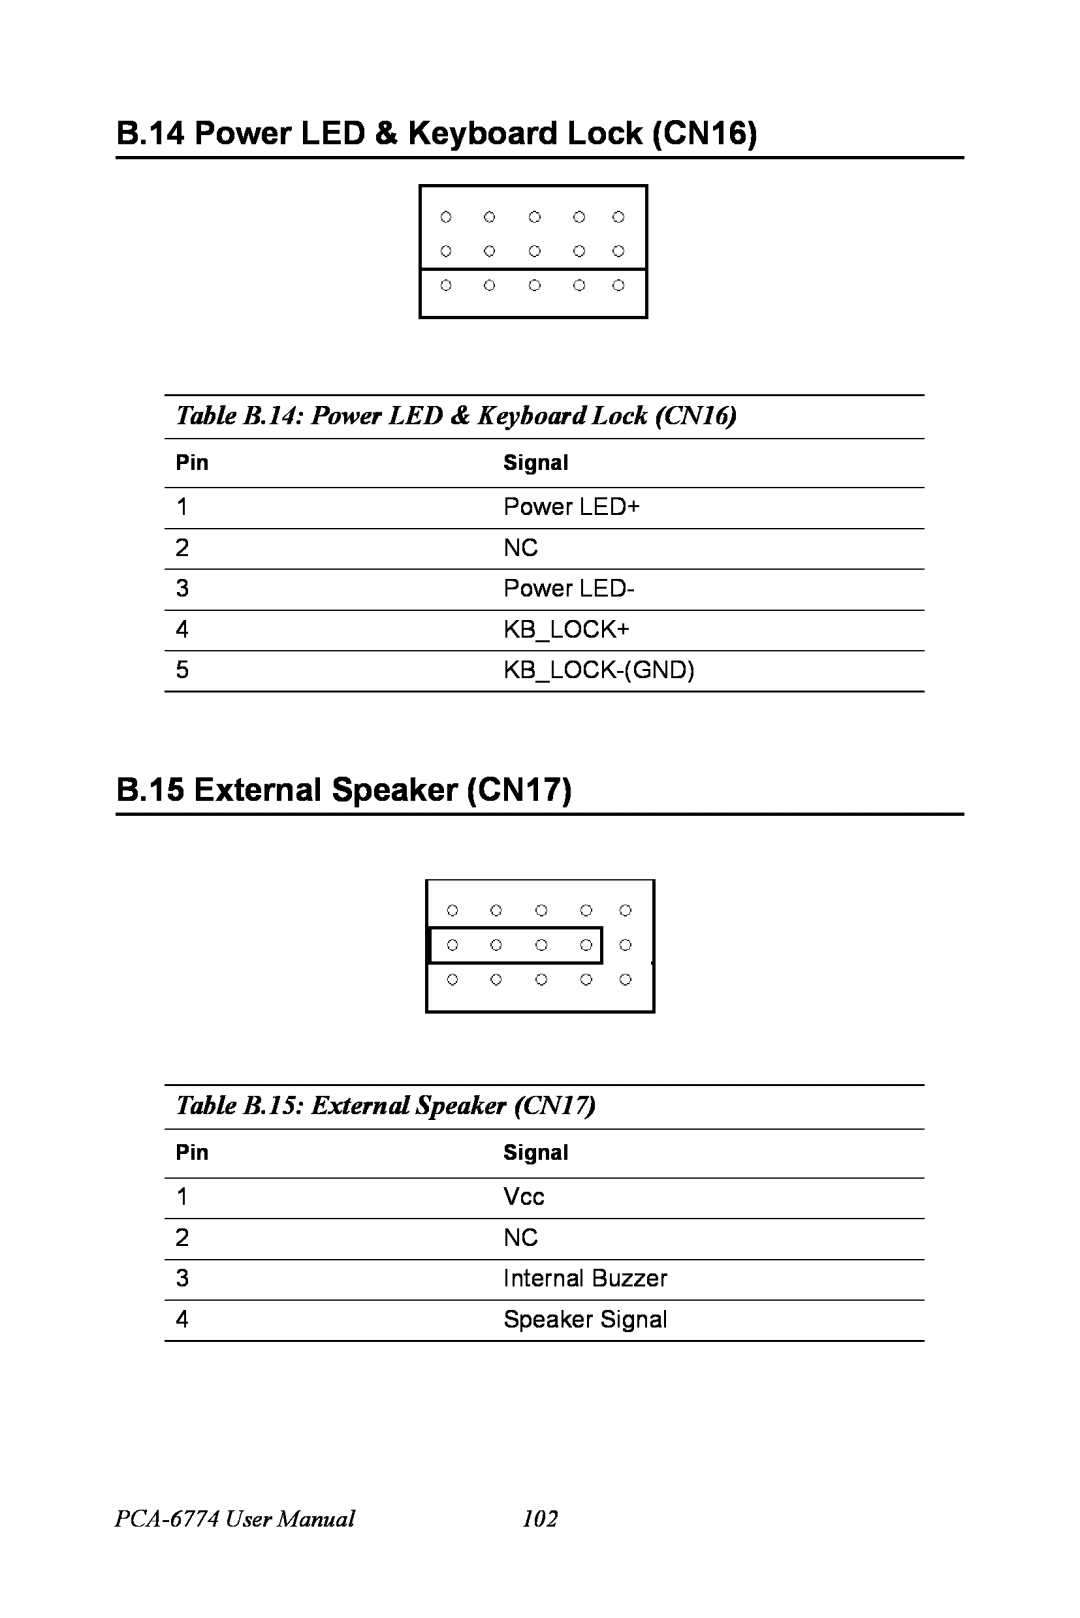 Advantech B.14 Power LED & Keyboard Lock CN16, Table B.15 External Speaker CN17, PCA-6774 User Manual, Signal 